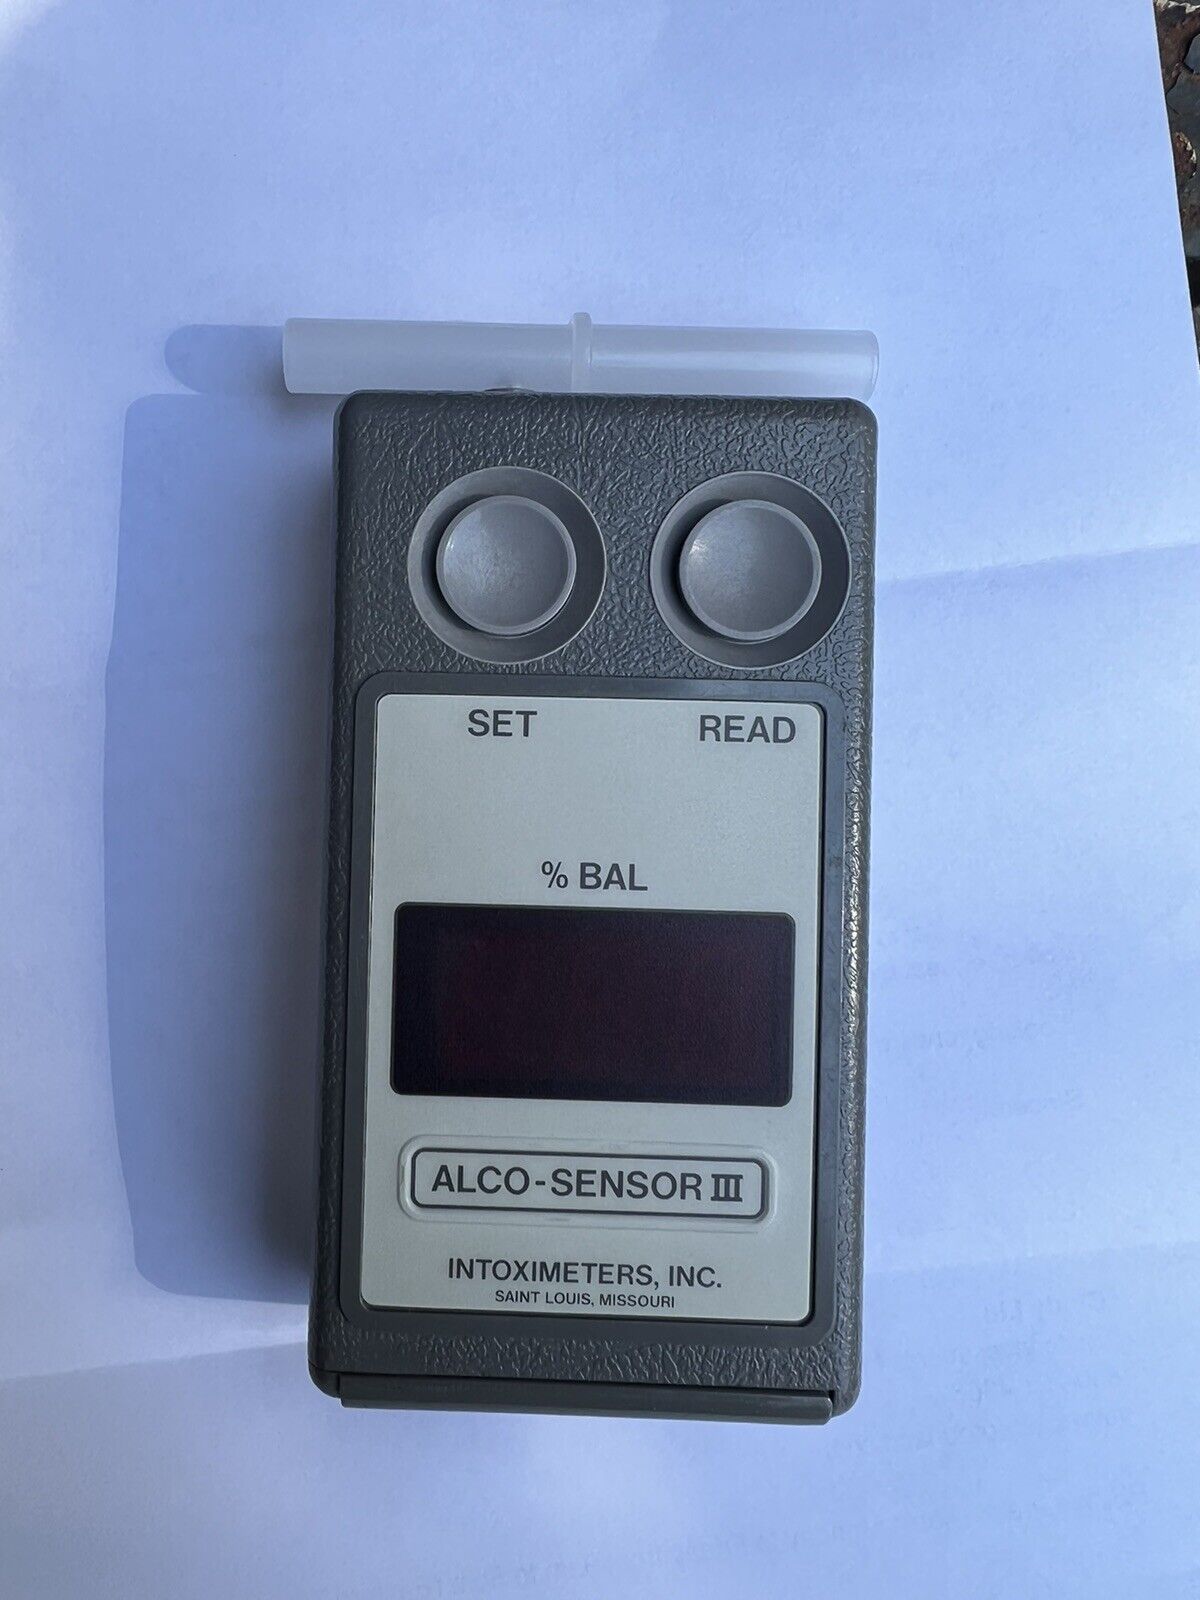 Intoximeters Alco-sensor Iii Breathalyzer Police State Trooper Halloween Prop